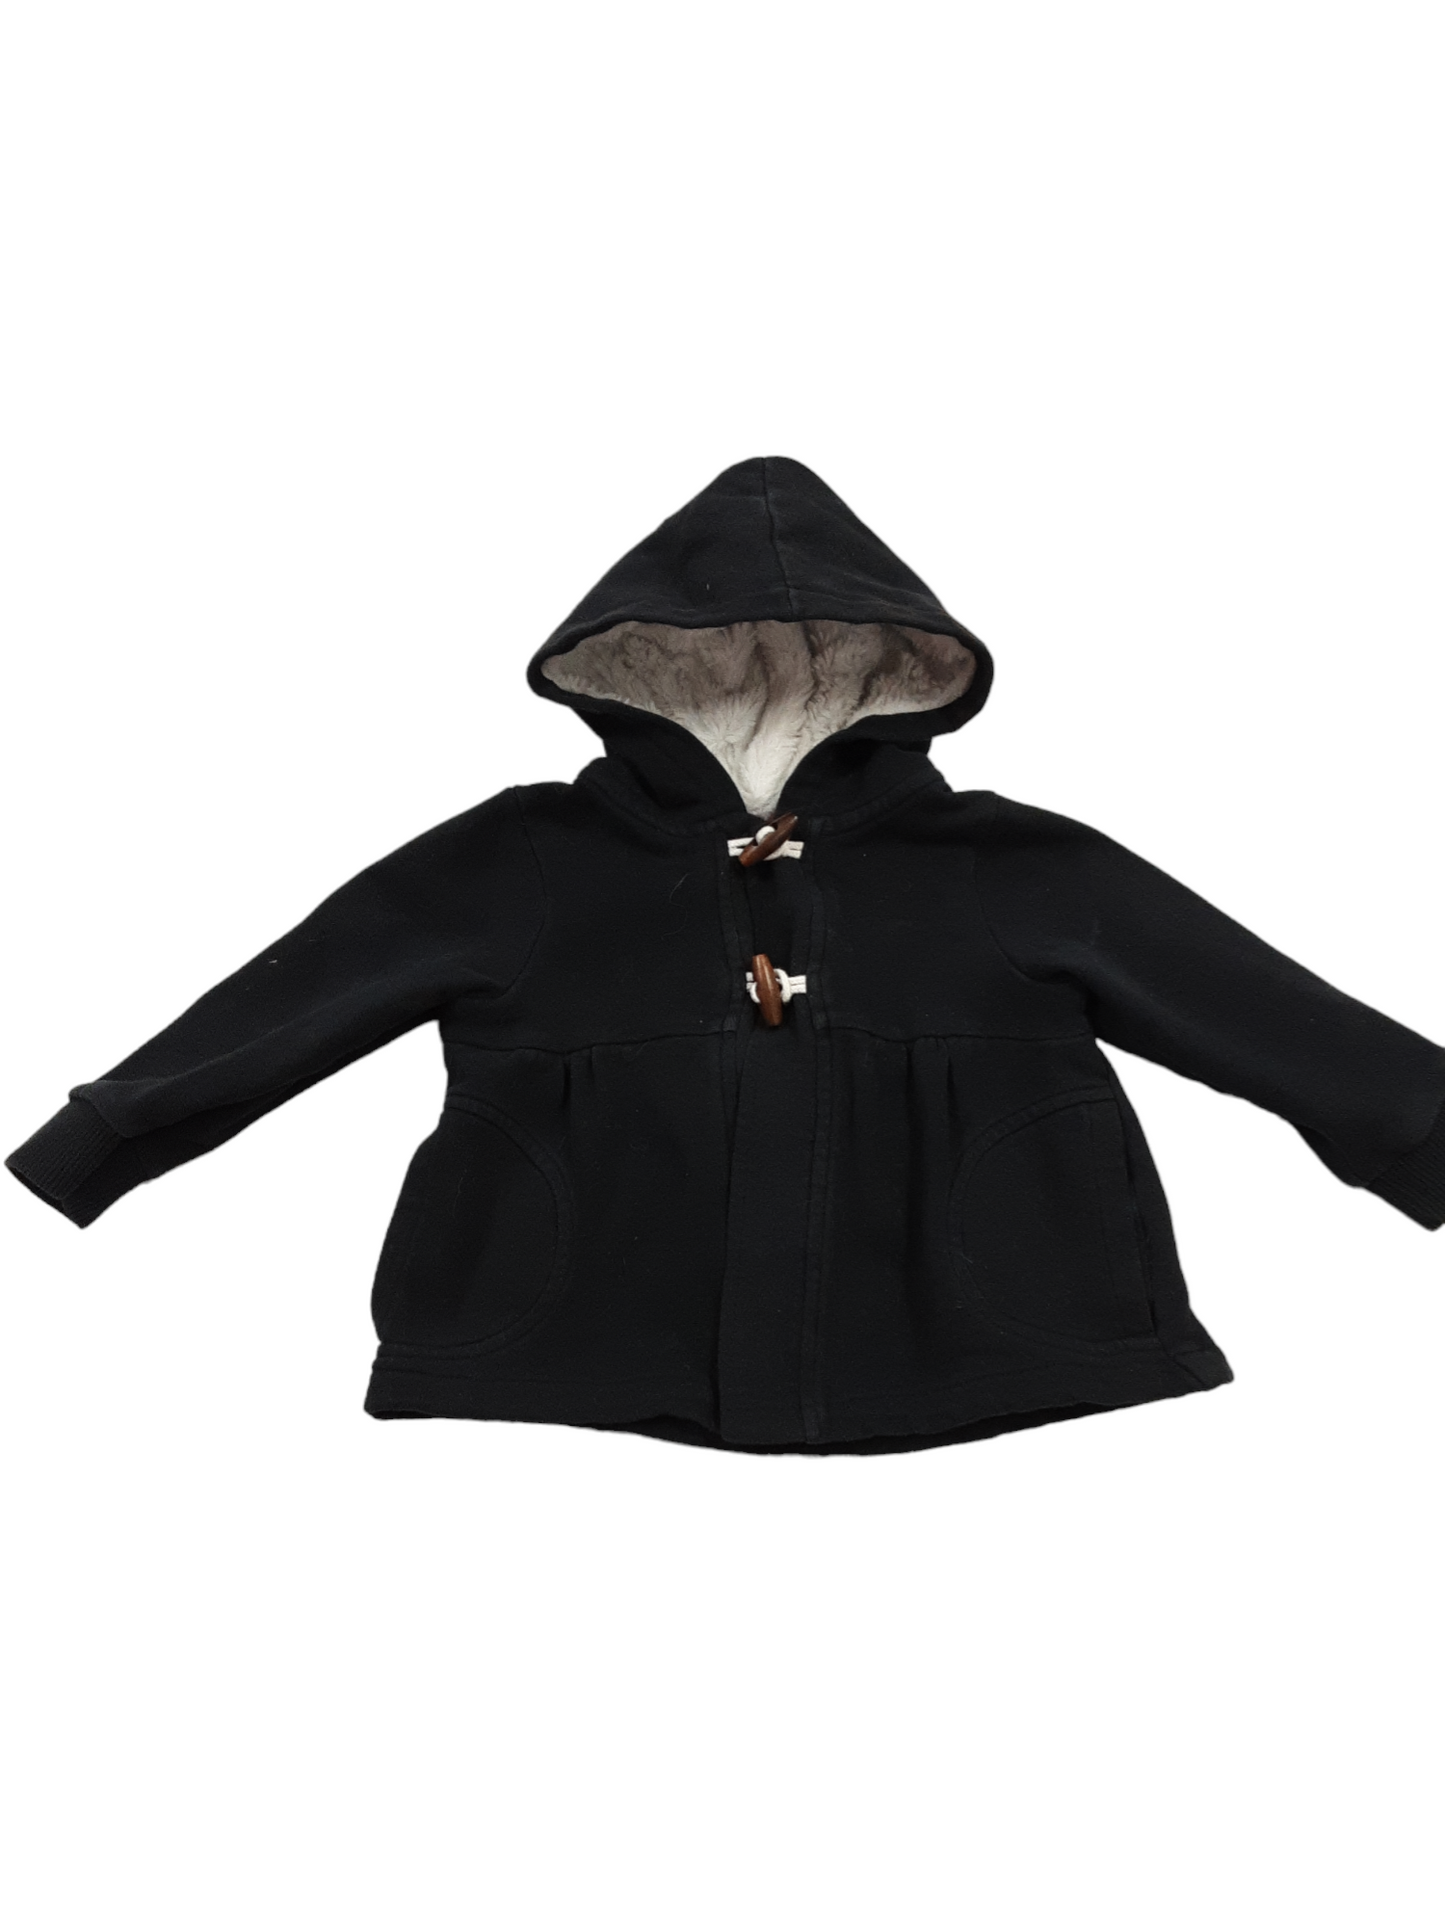 Black fleece jacket size 18months